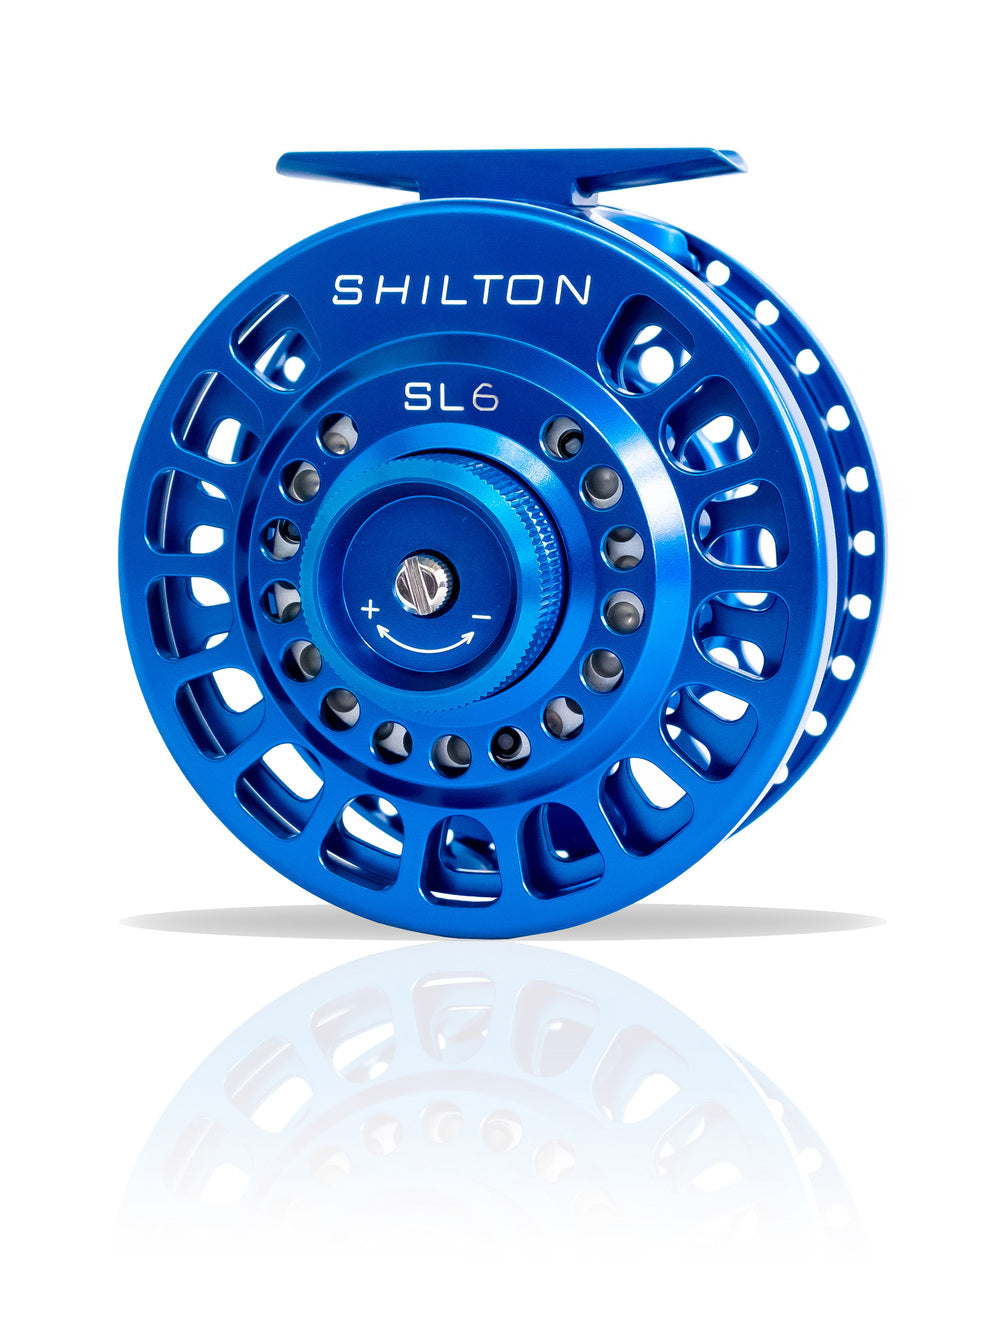 Shilton SL6 Reels (9-10wt) SL9 in Blue